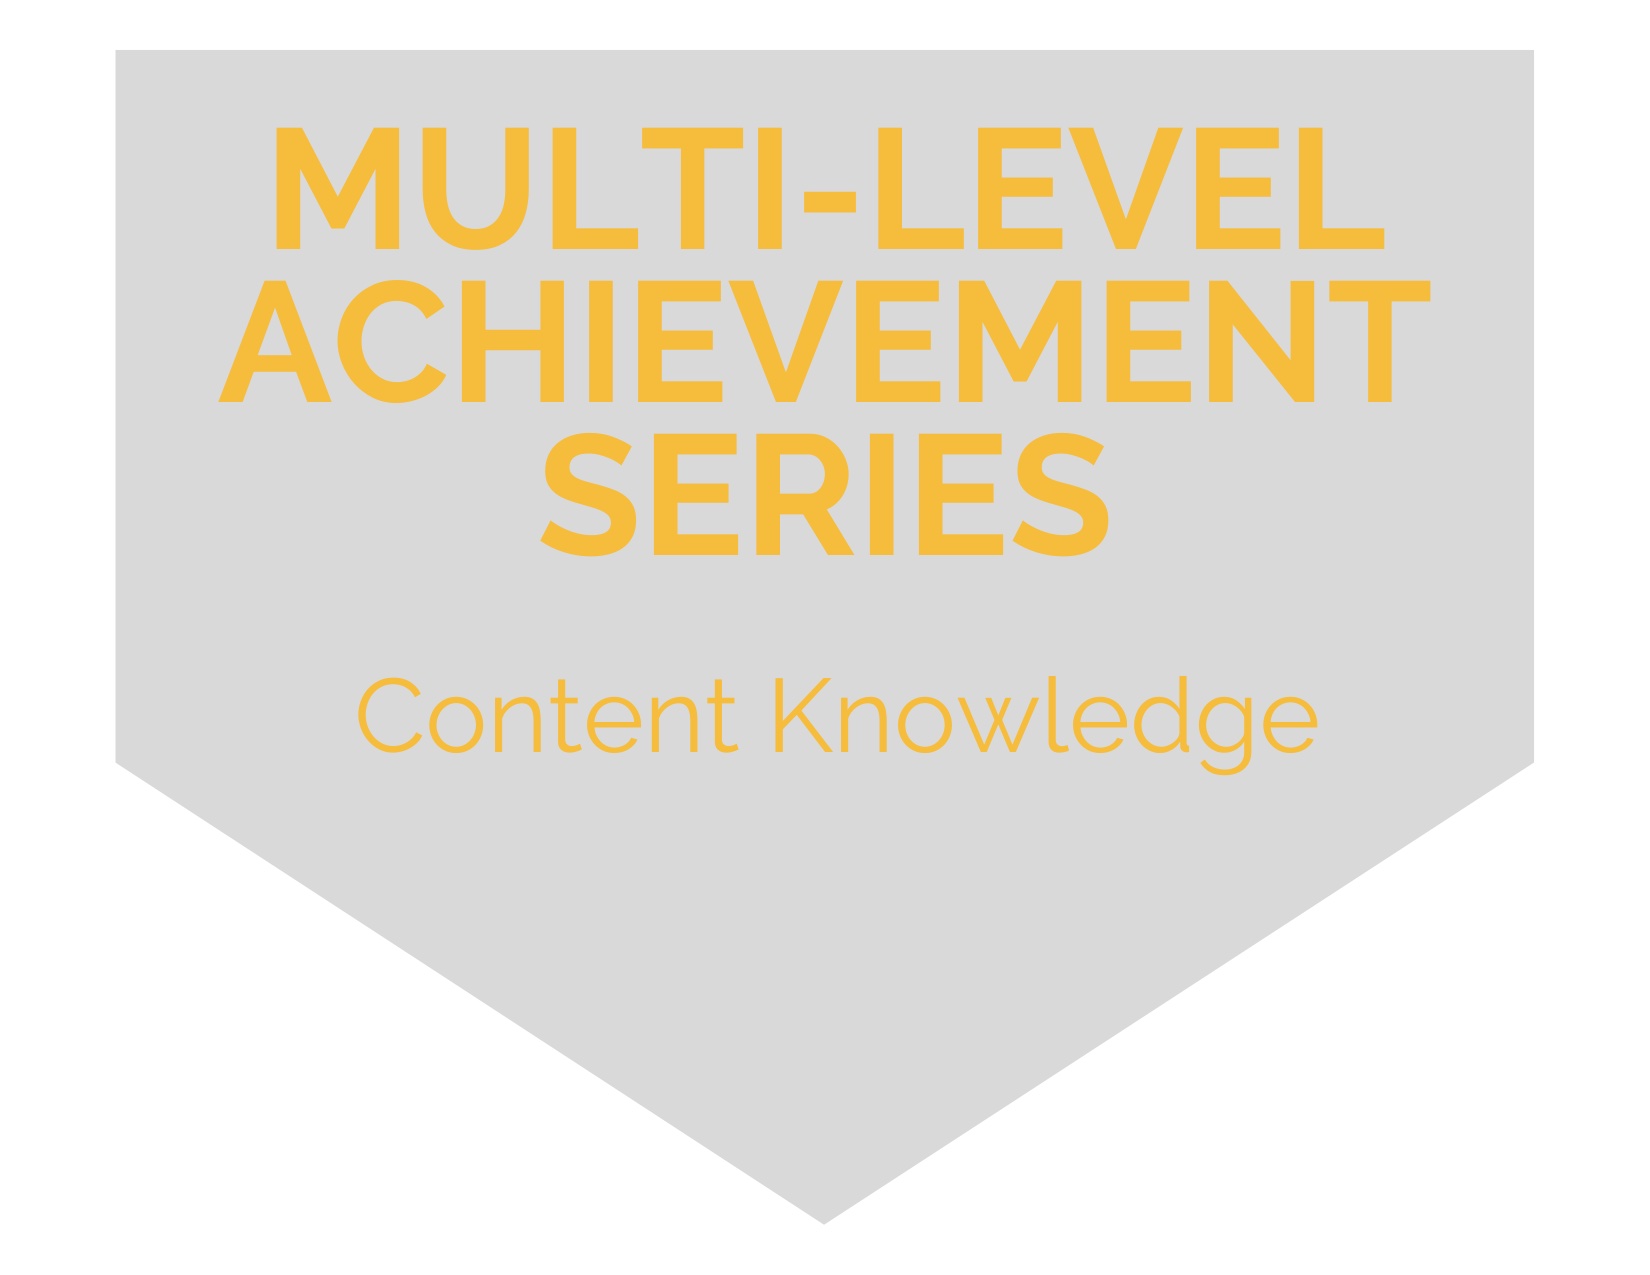 Multi-level Achievement Series Image - Gray